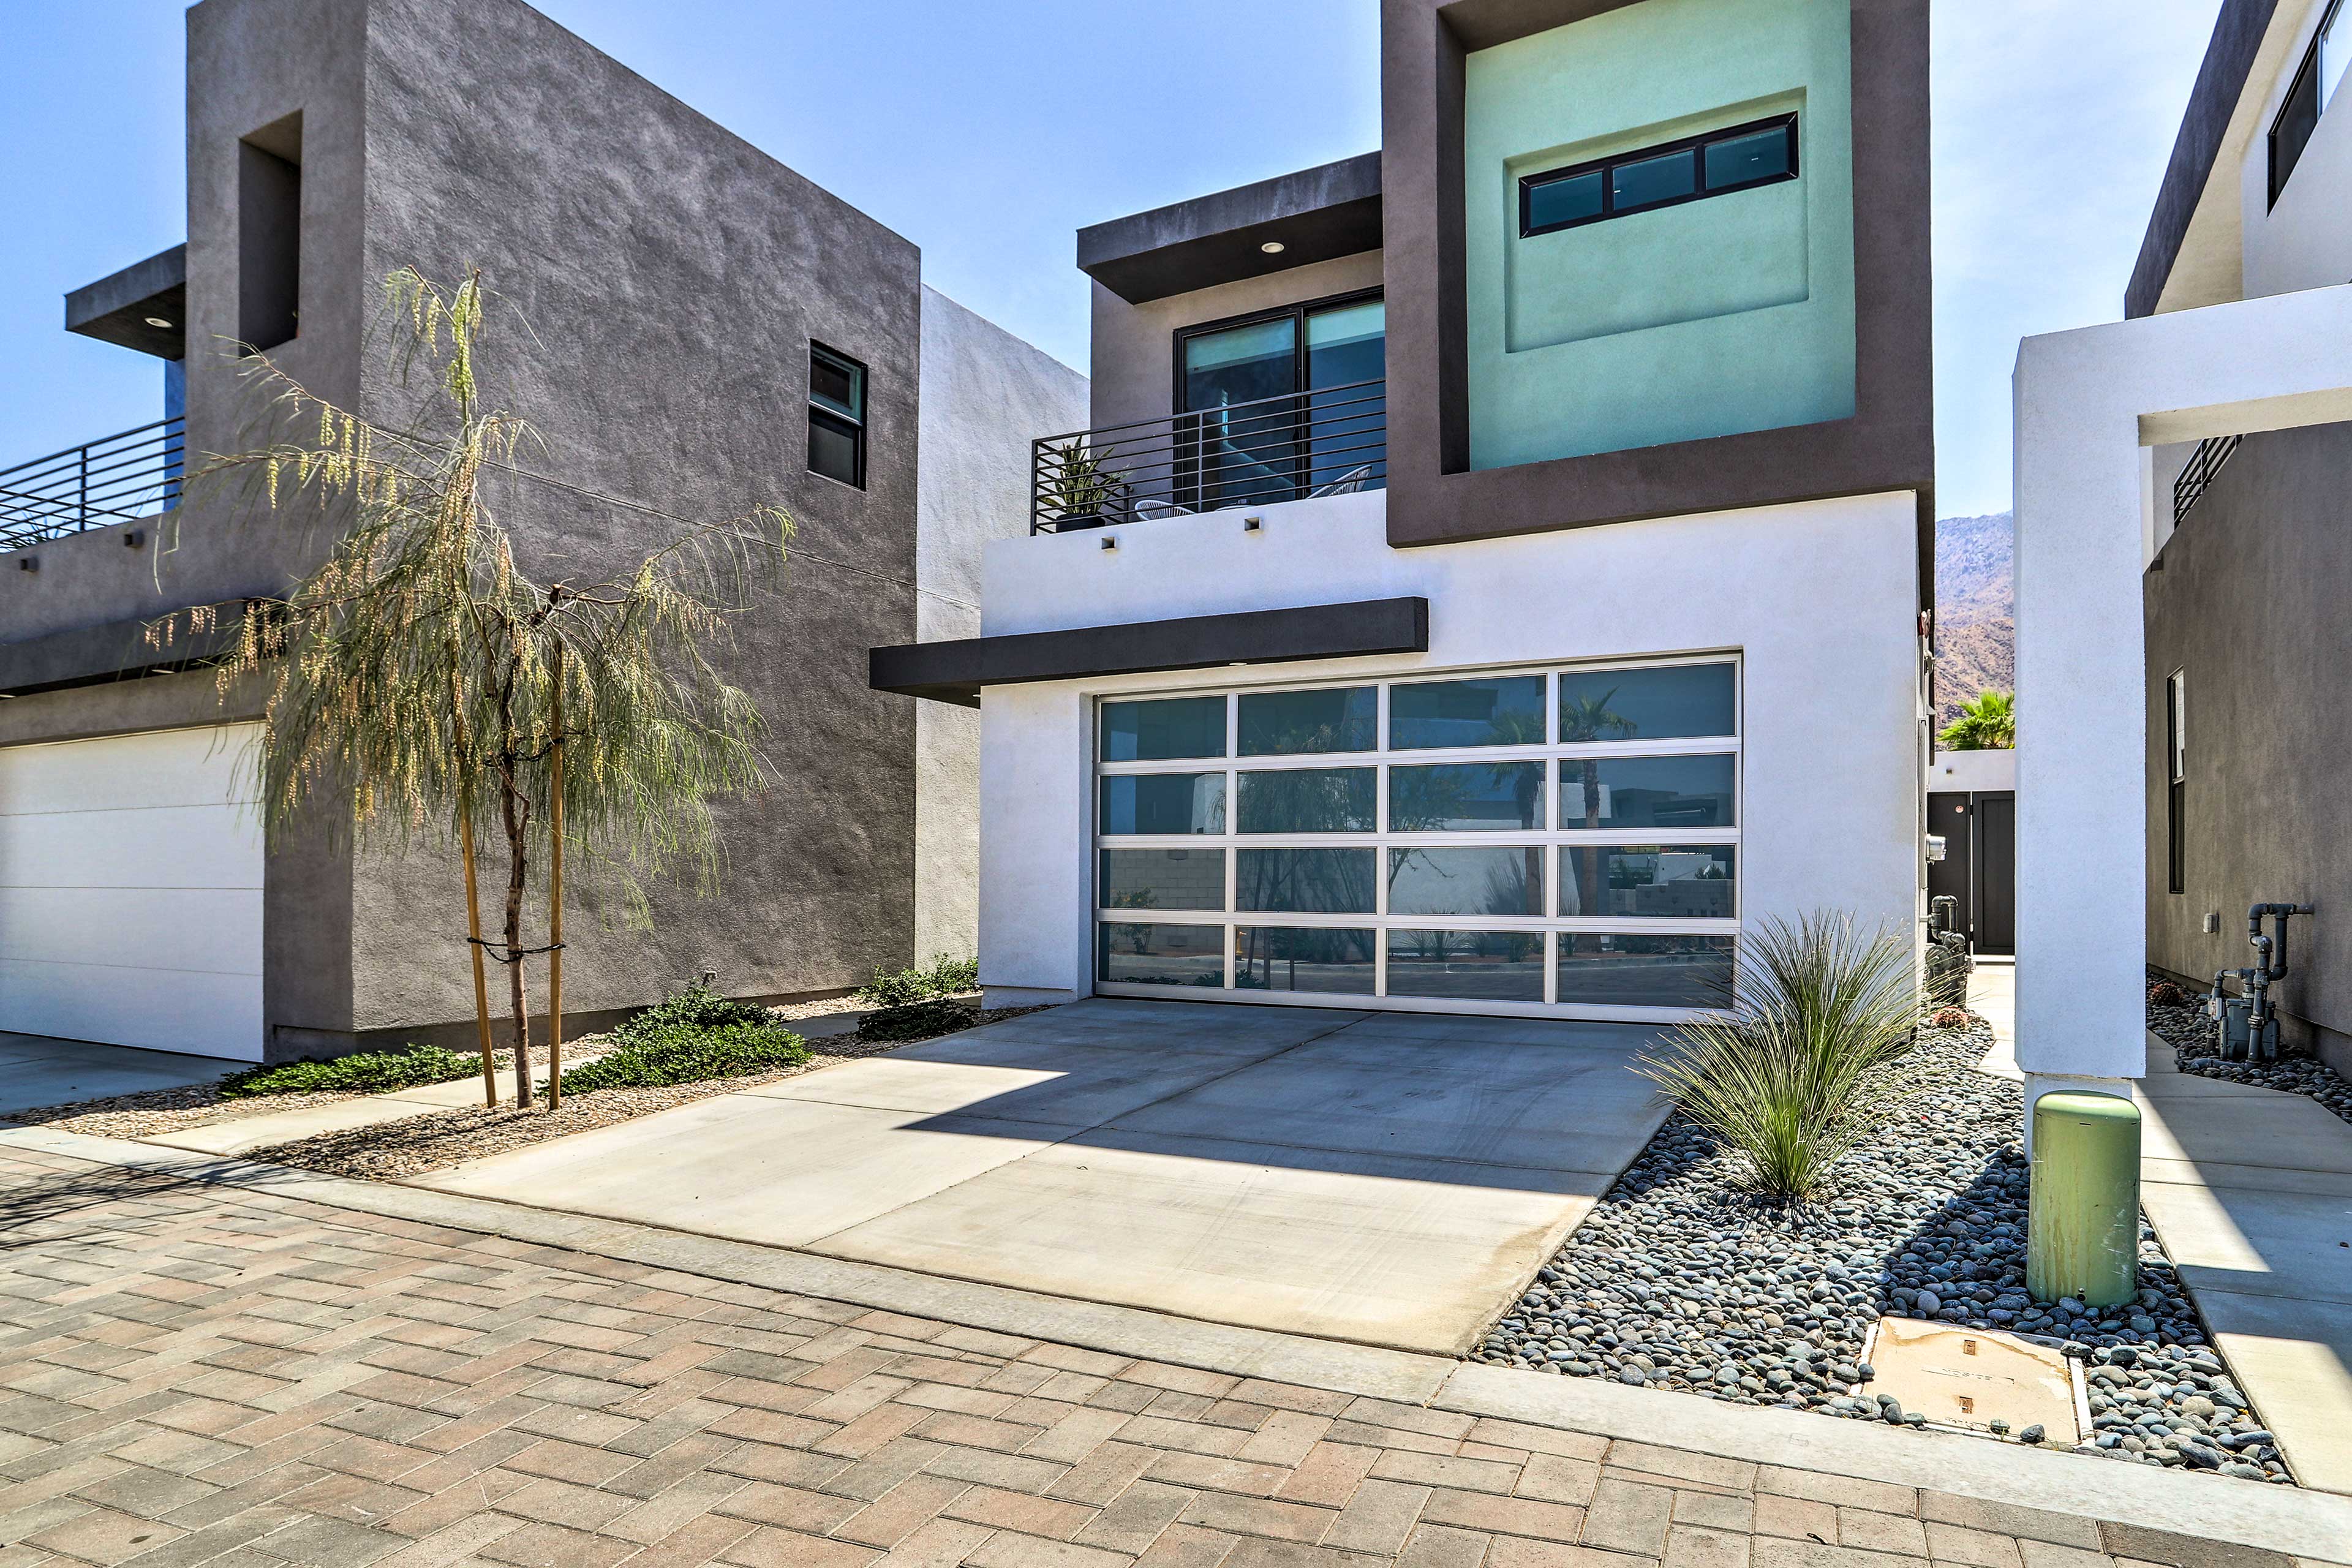 House Exterior | Garage (2 Vehicles) | Driveway (2 Vehicles)